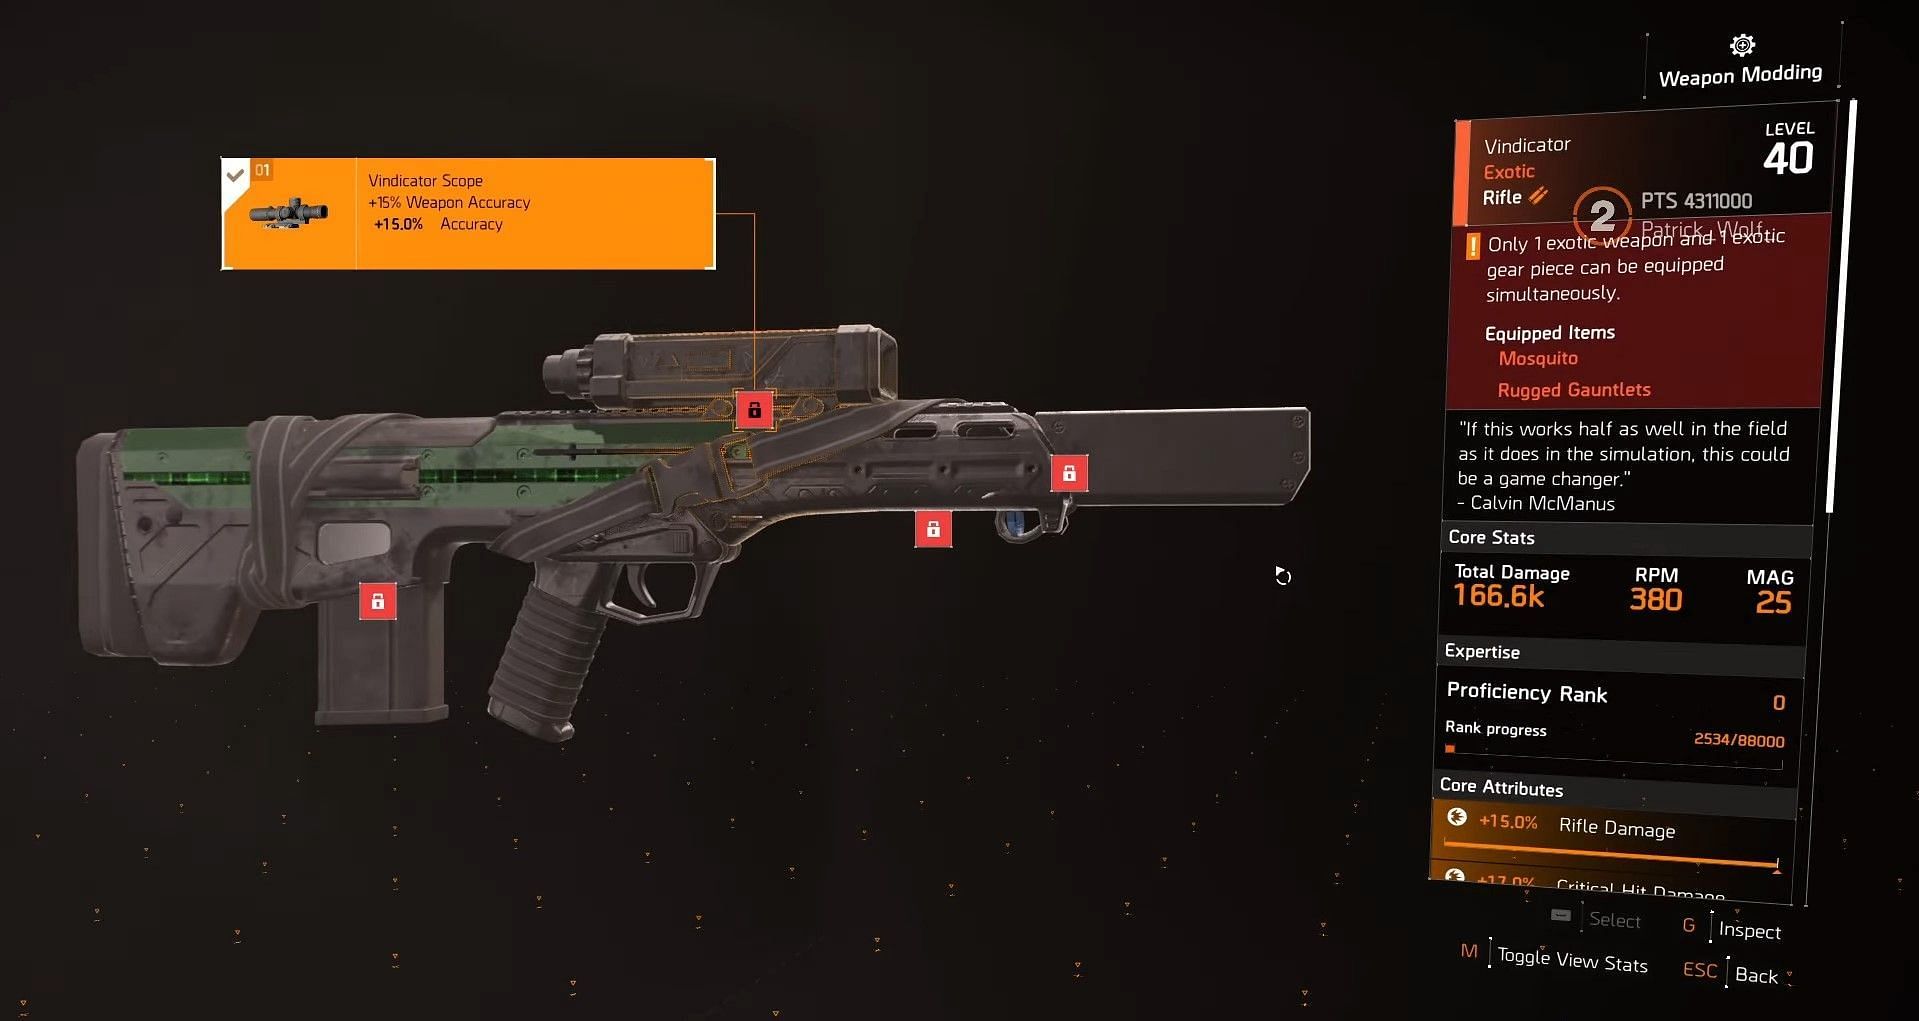 Vindicator Exotic Rifle in The Division 2 (Image via Ubisoft)